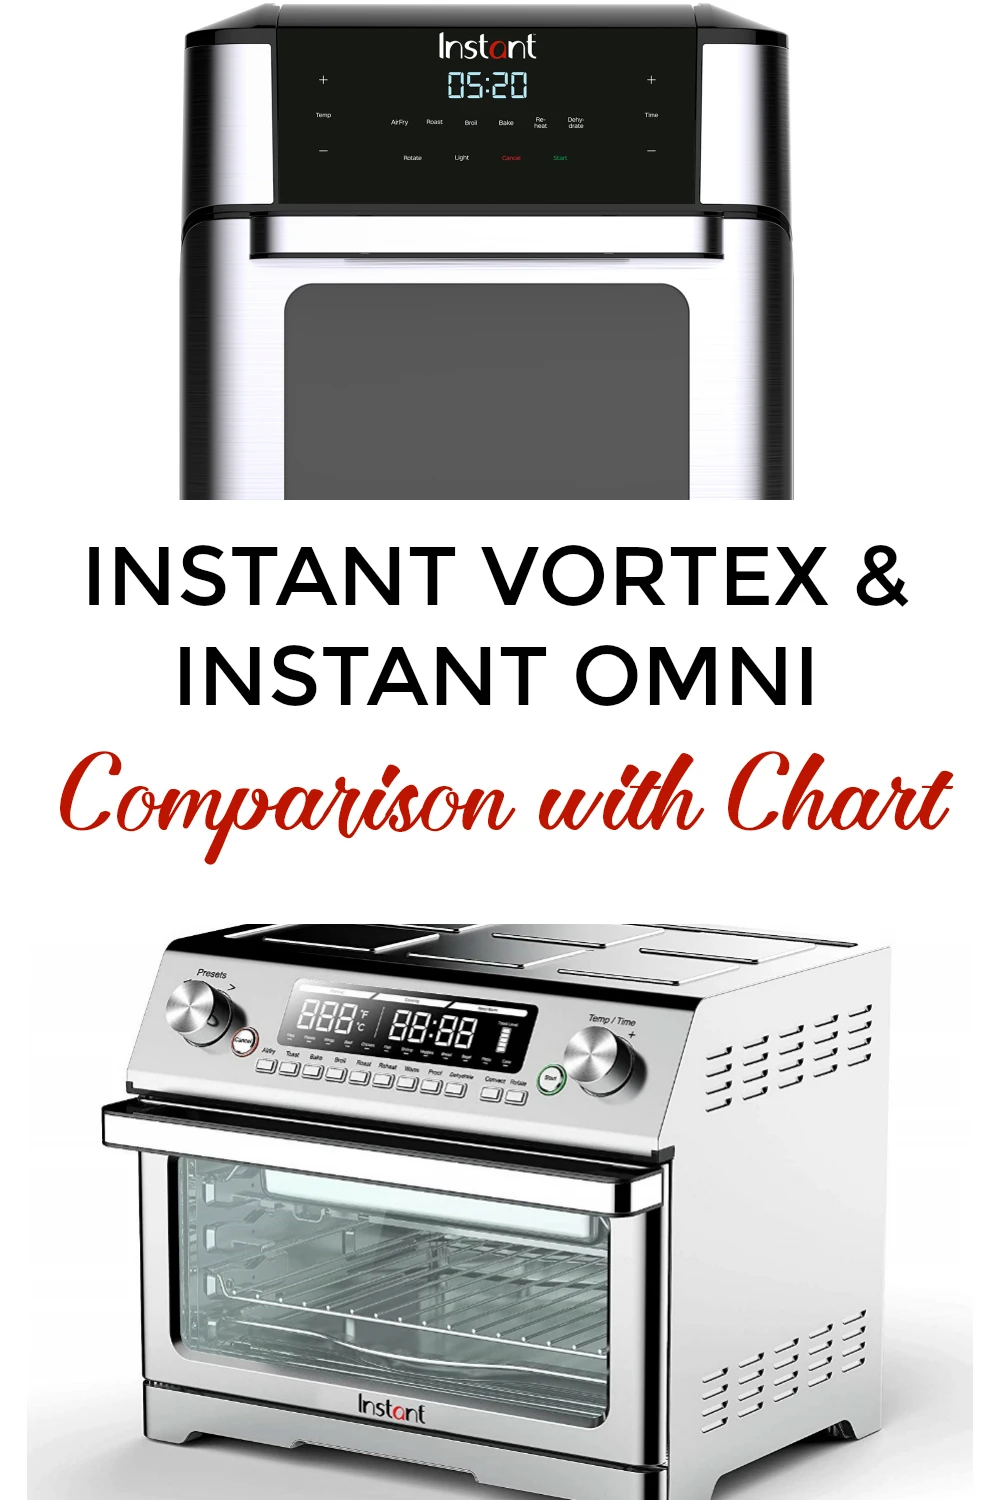 https://instantpotcooking.com/wp-content/uploads/2019/09/Instant-Vortex-and-Instant-Omni-Comparison-with-Chart.jpg.webp